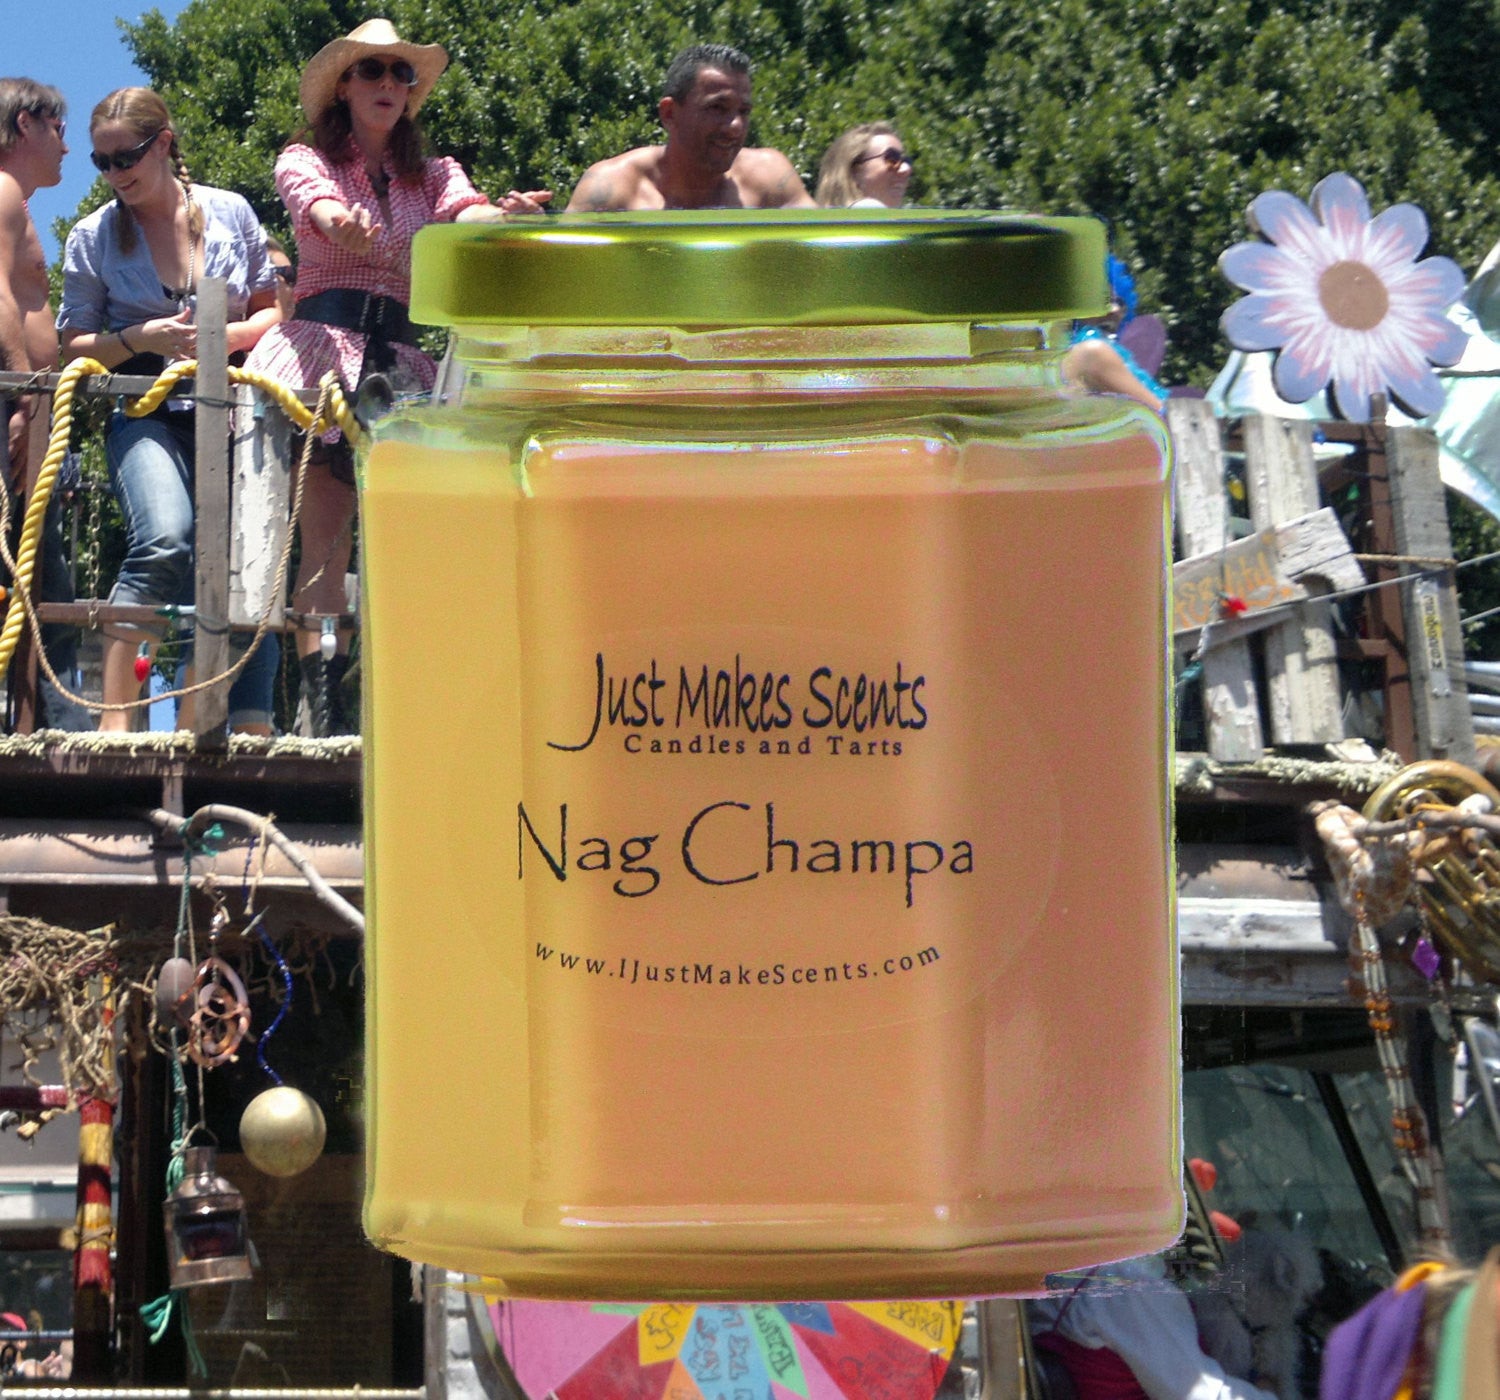 Nag Champa Candle